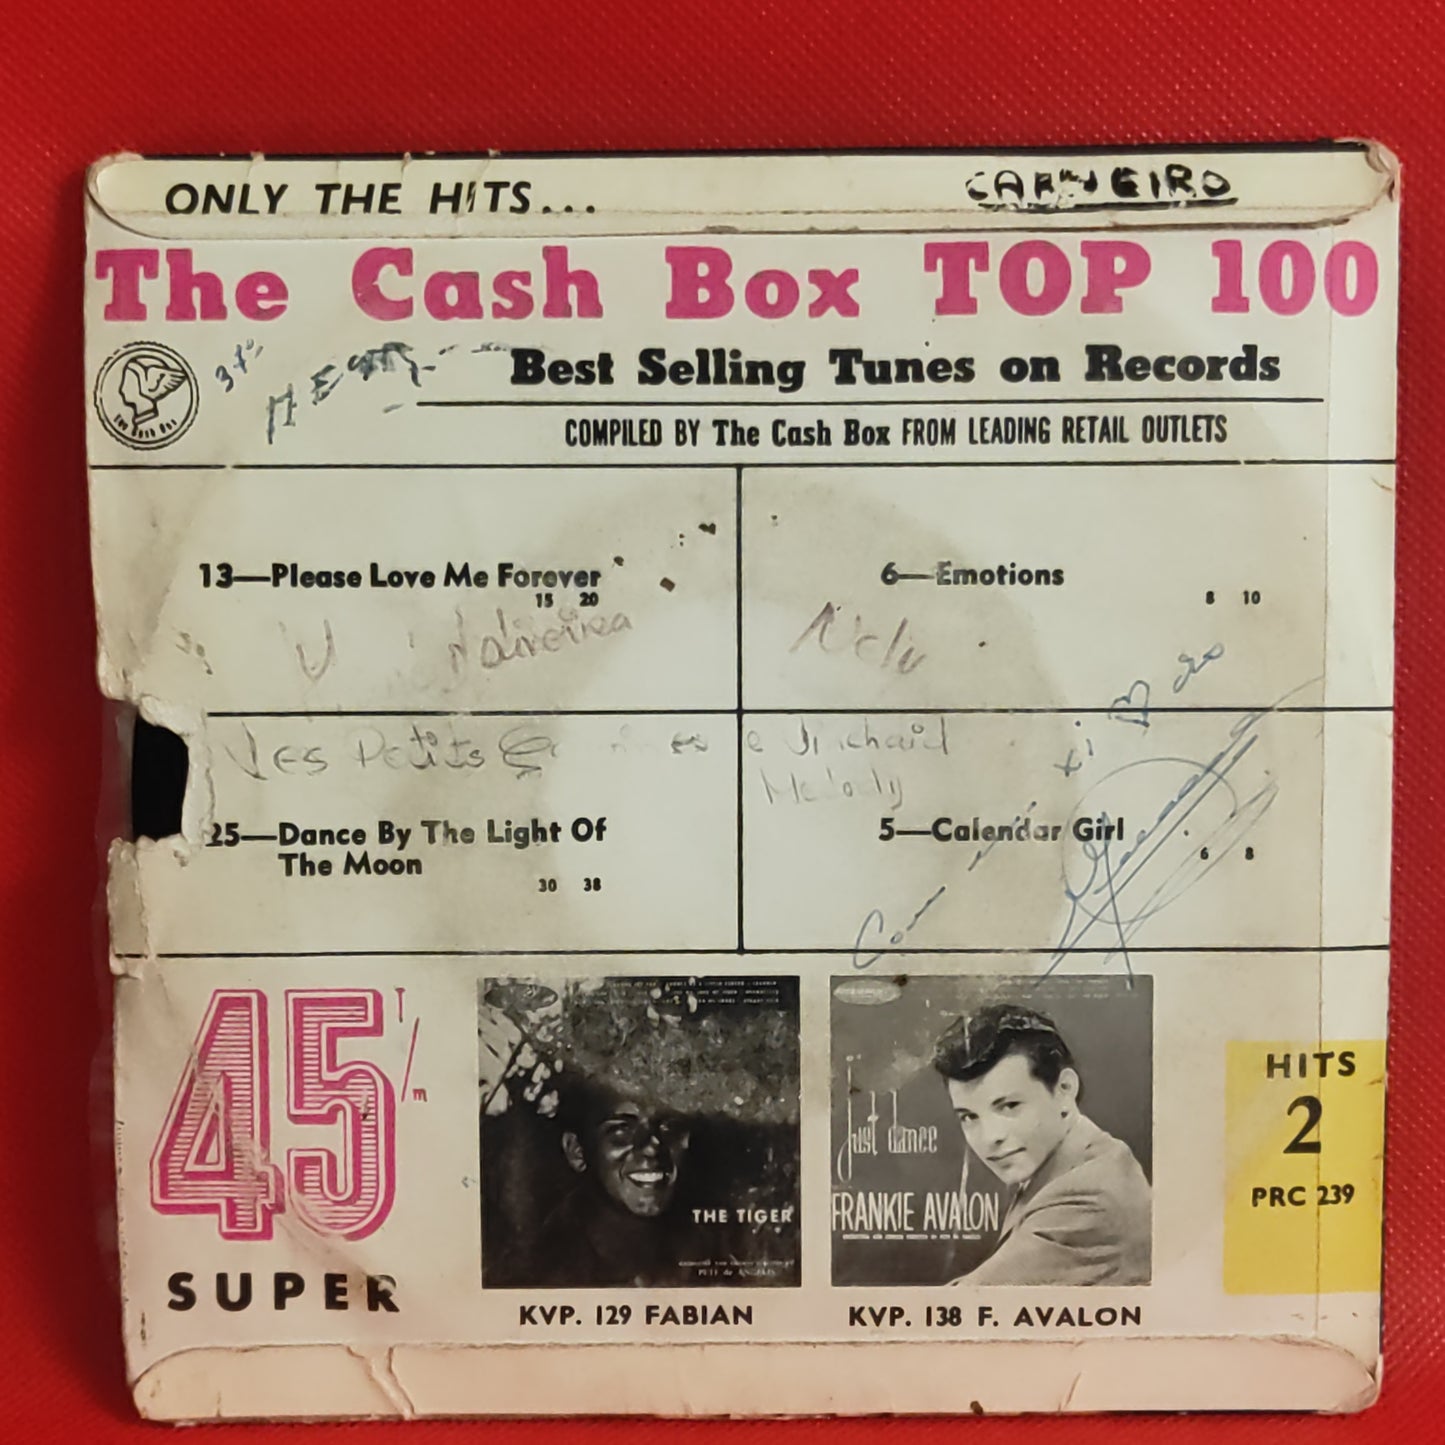 The Cash Box Top 100